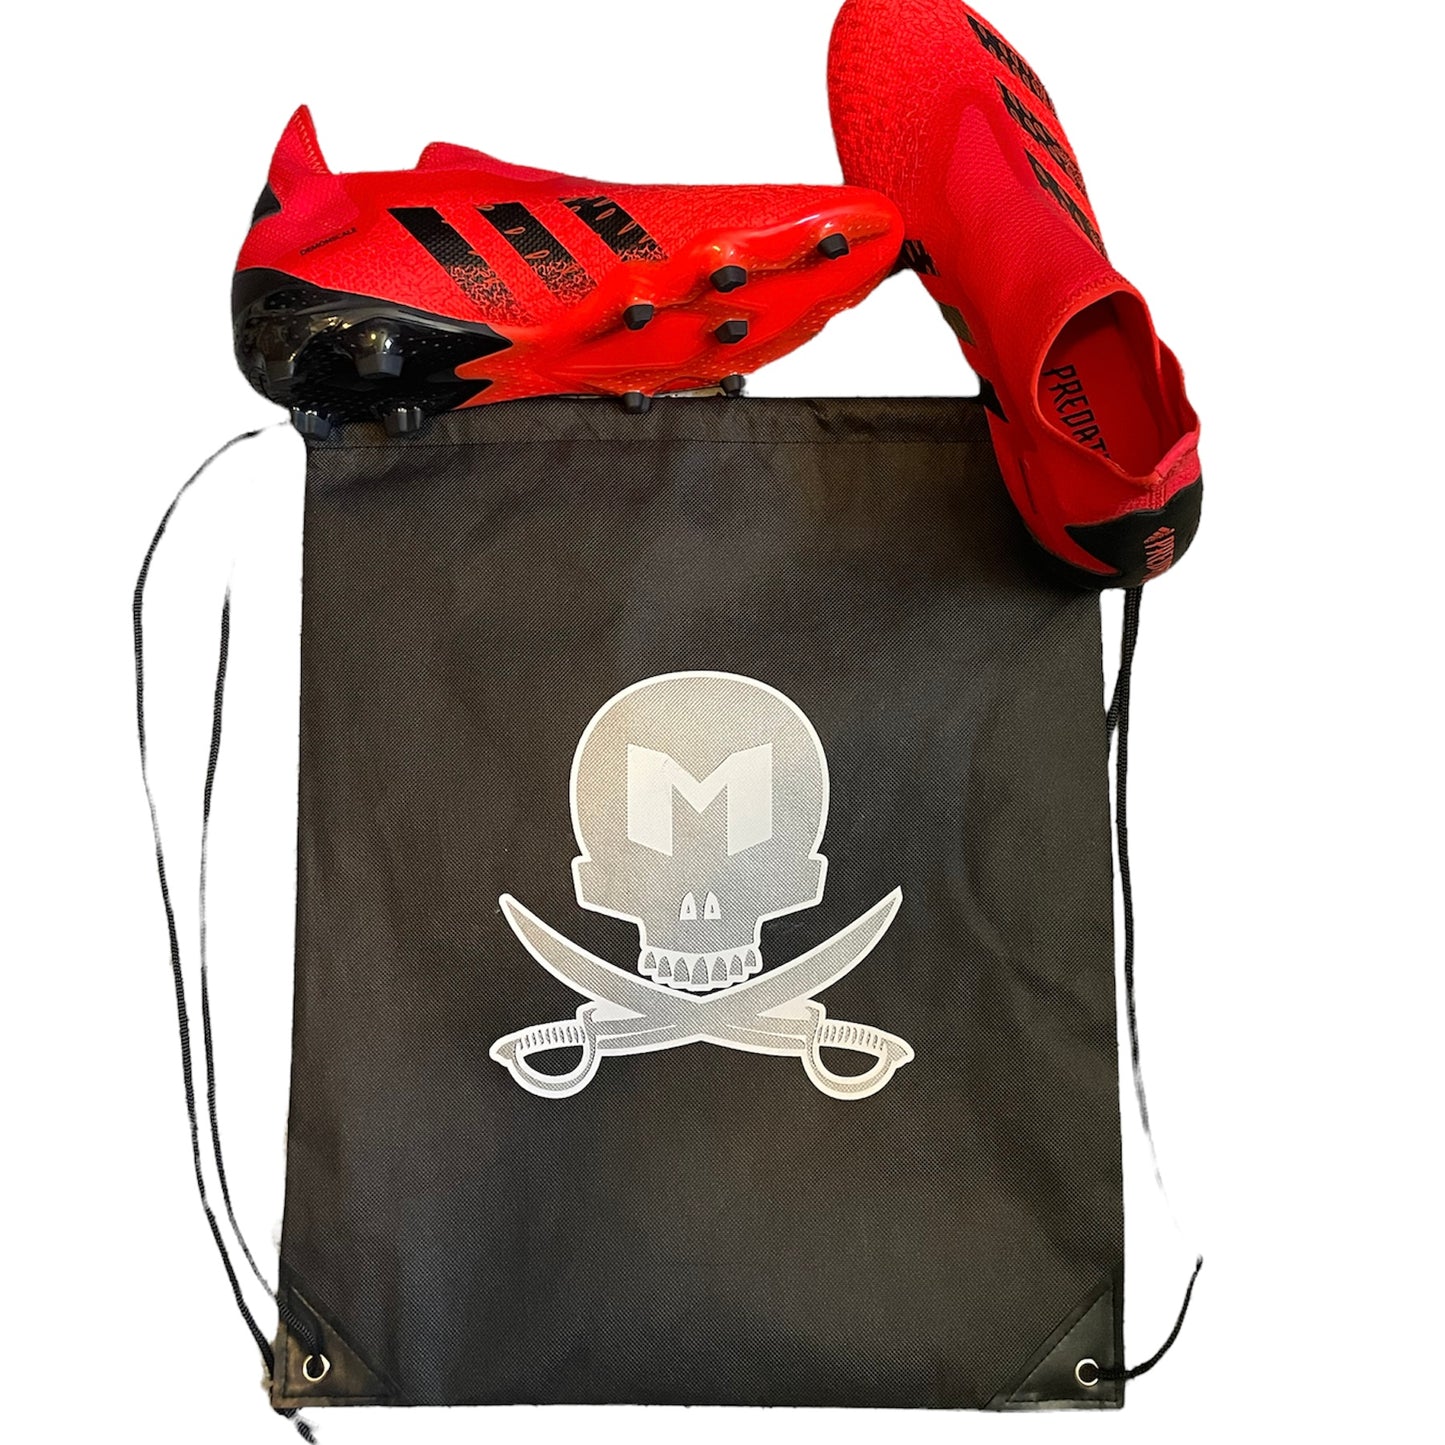 Mutiny Shoe bag